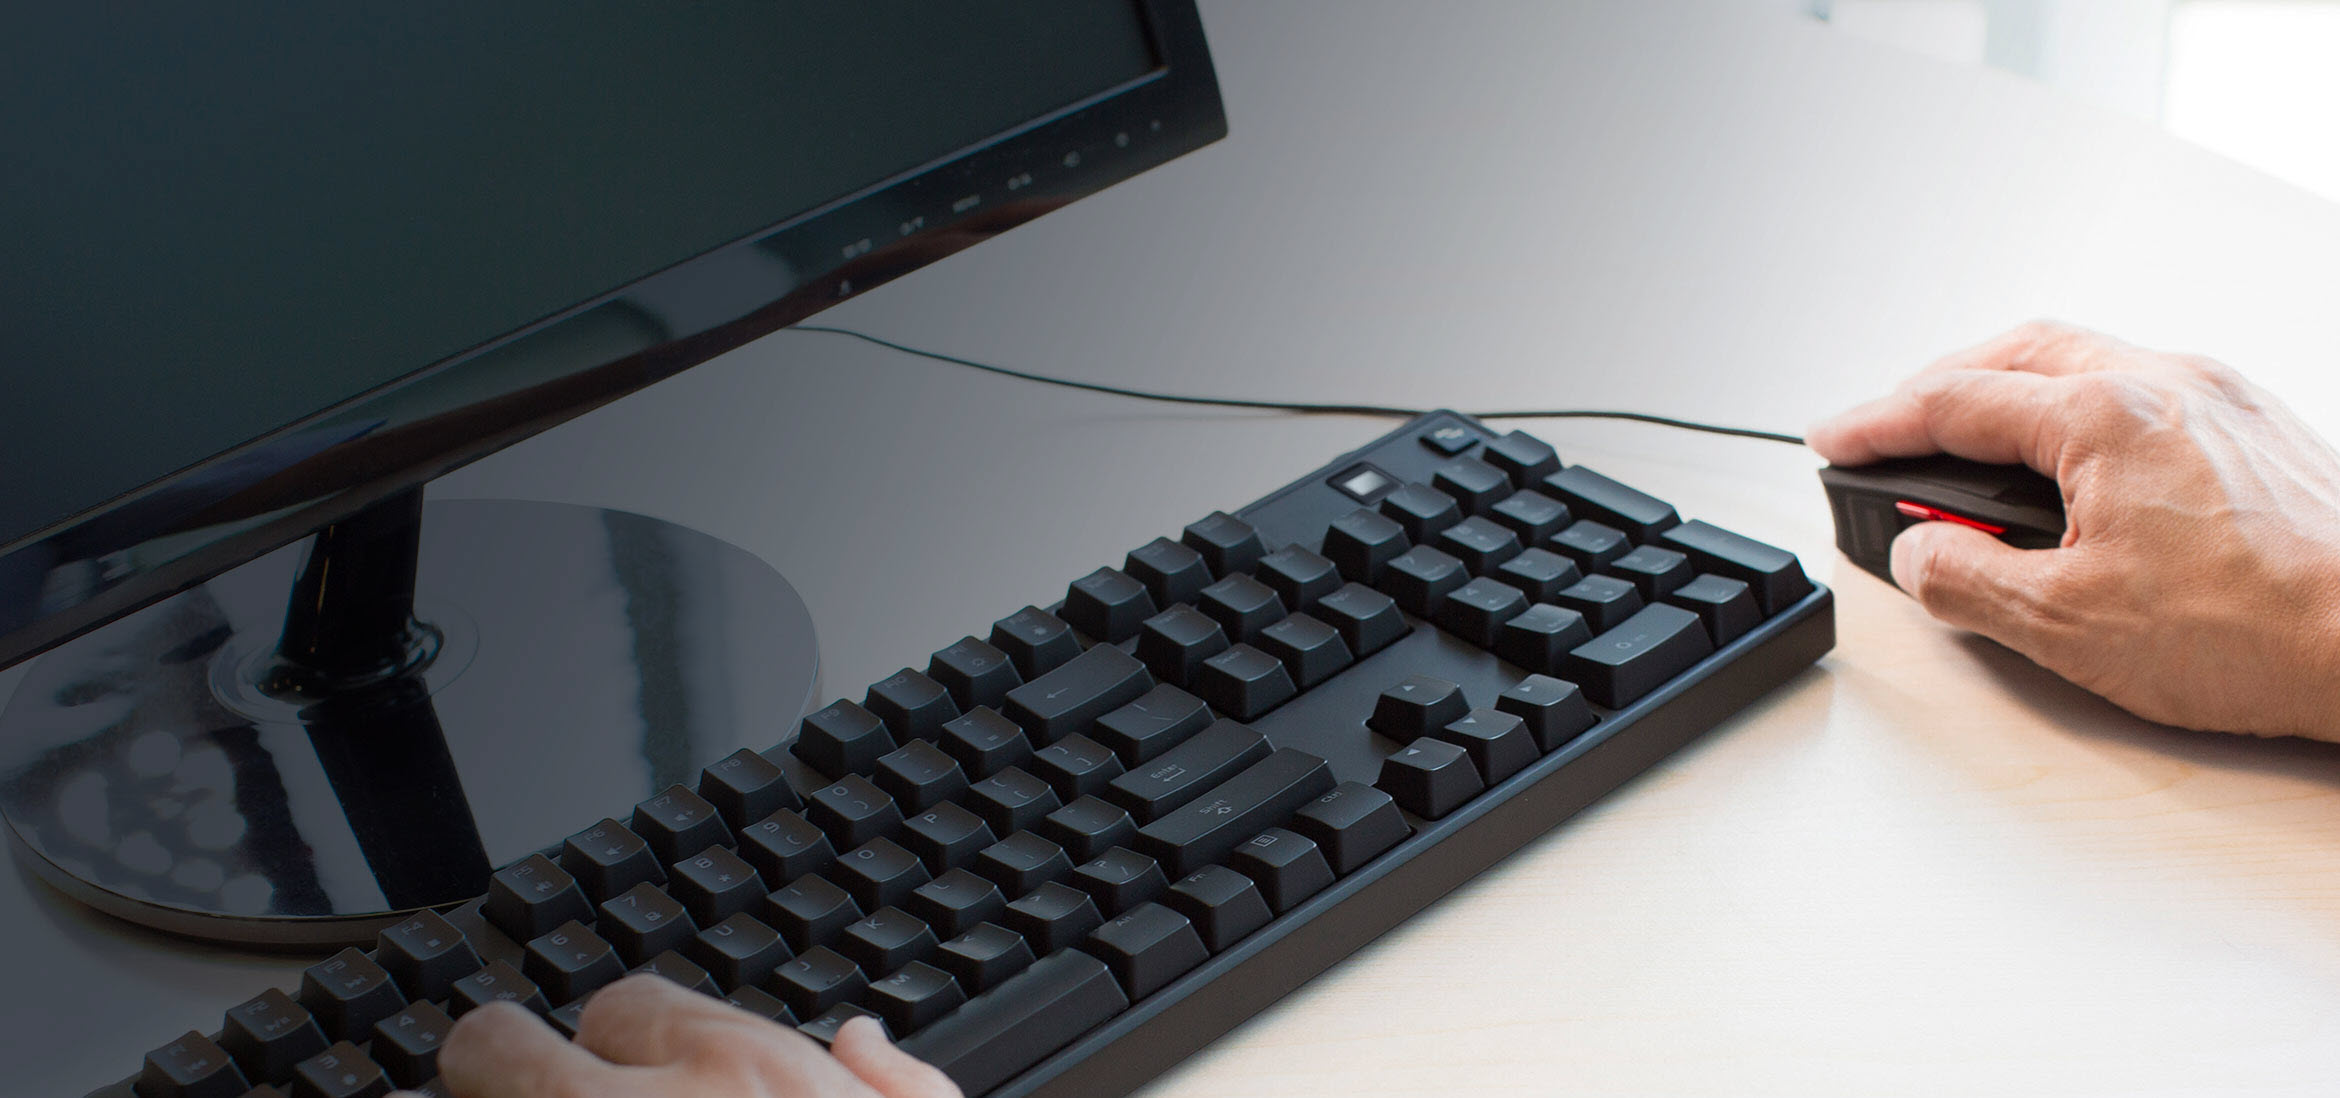 Fingerprint Authentication on PC Mouse SmartBar Keyboard ...